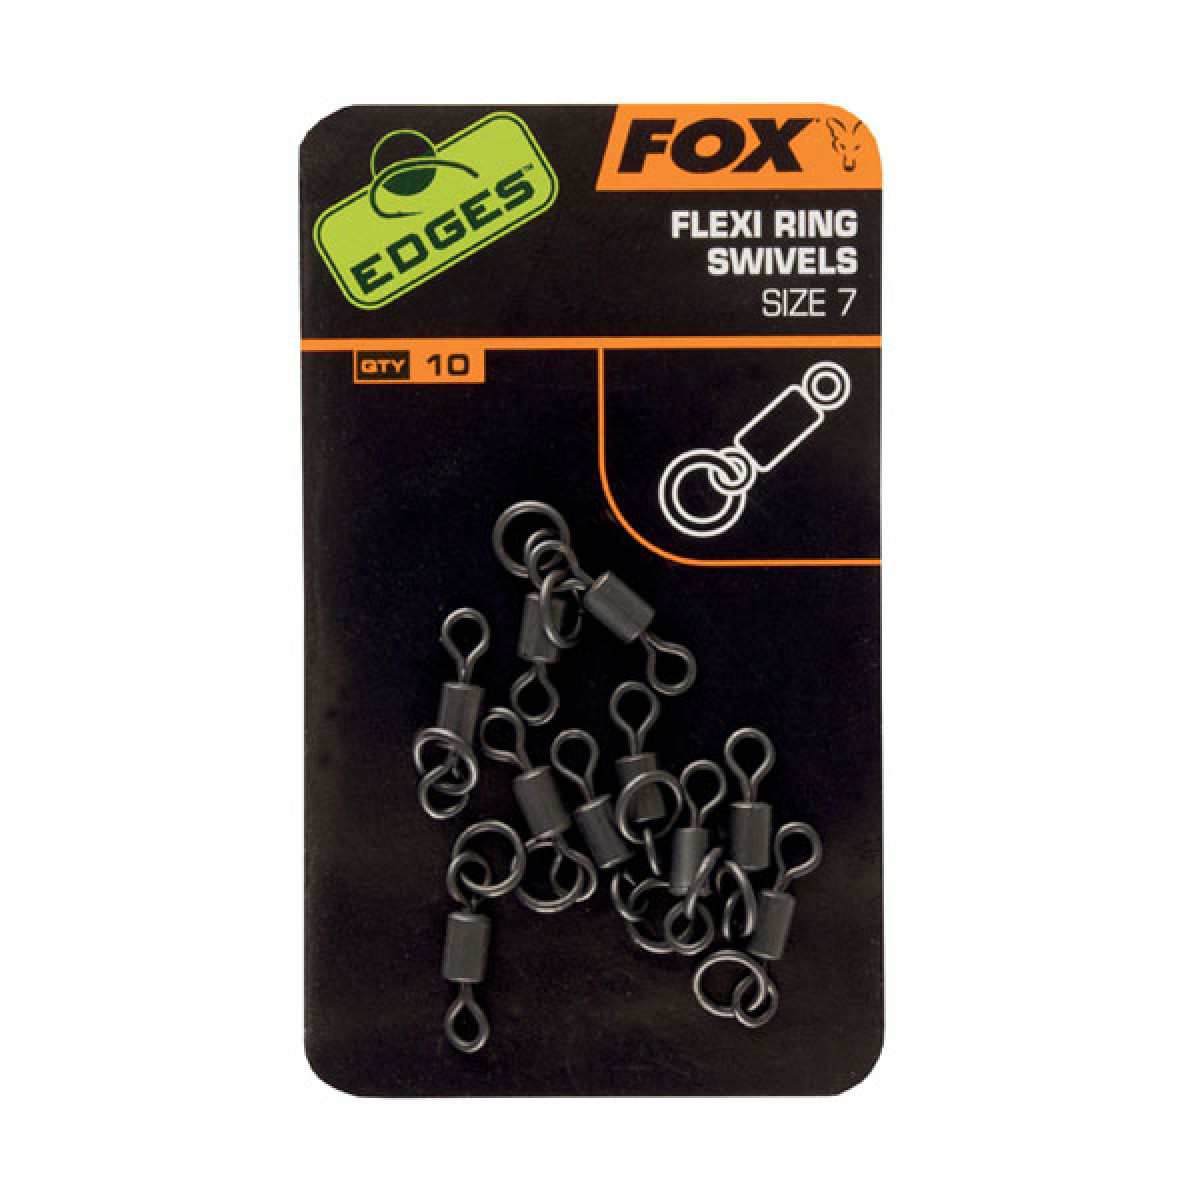 FOX FLEXI RING SWIVELS